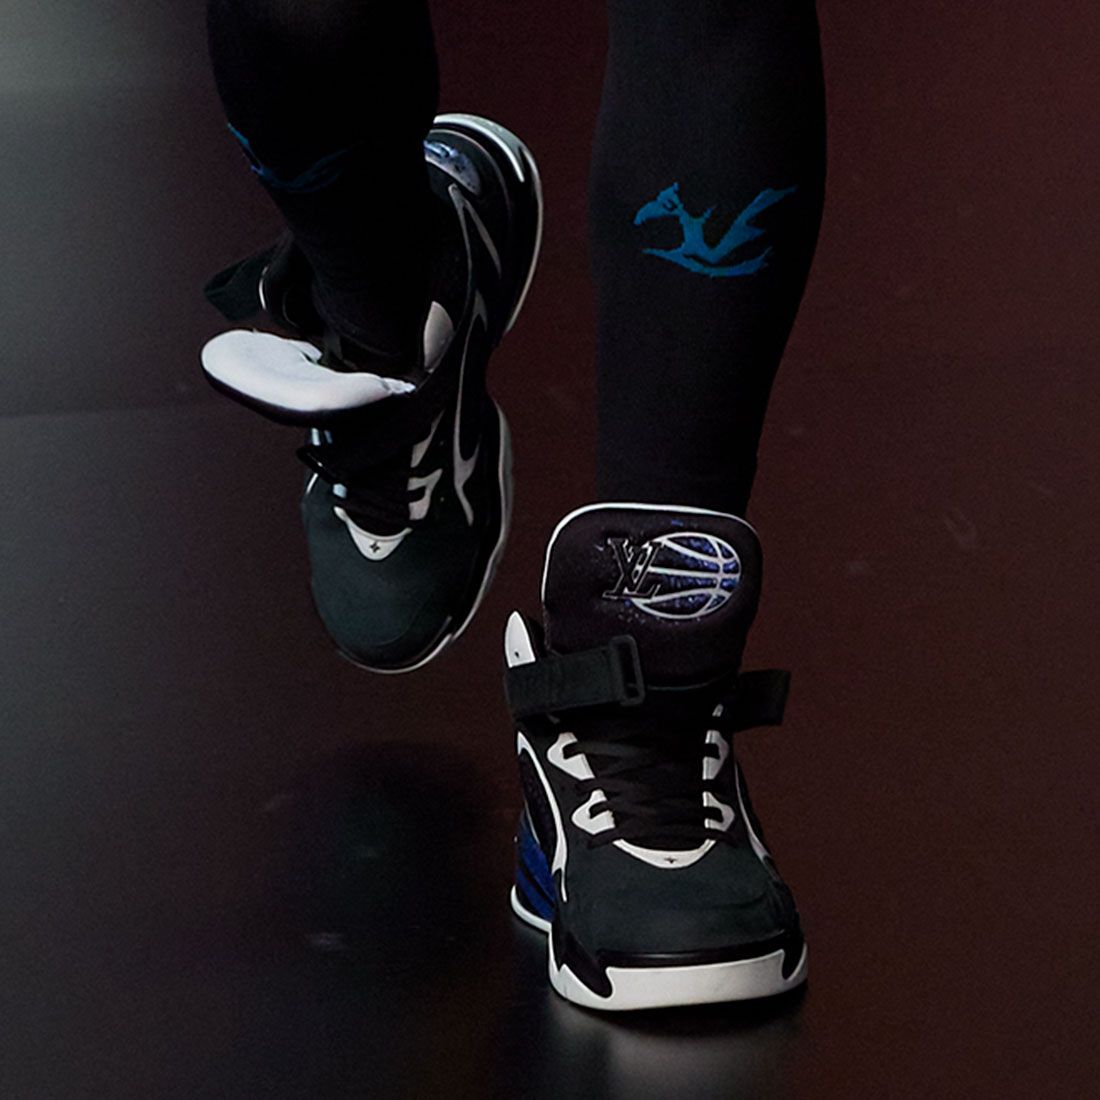 Virgil Abloh x Louis Vuitton SK8 sneakers releasing for FW22